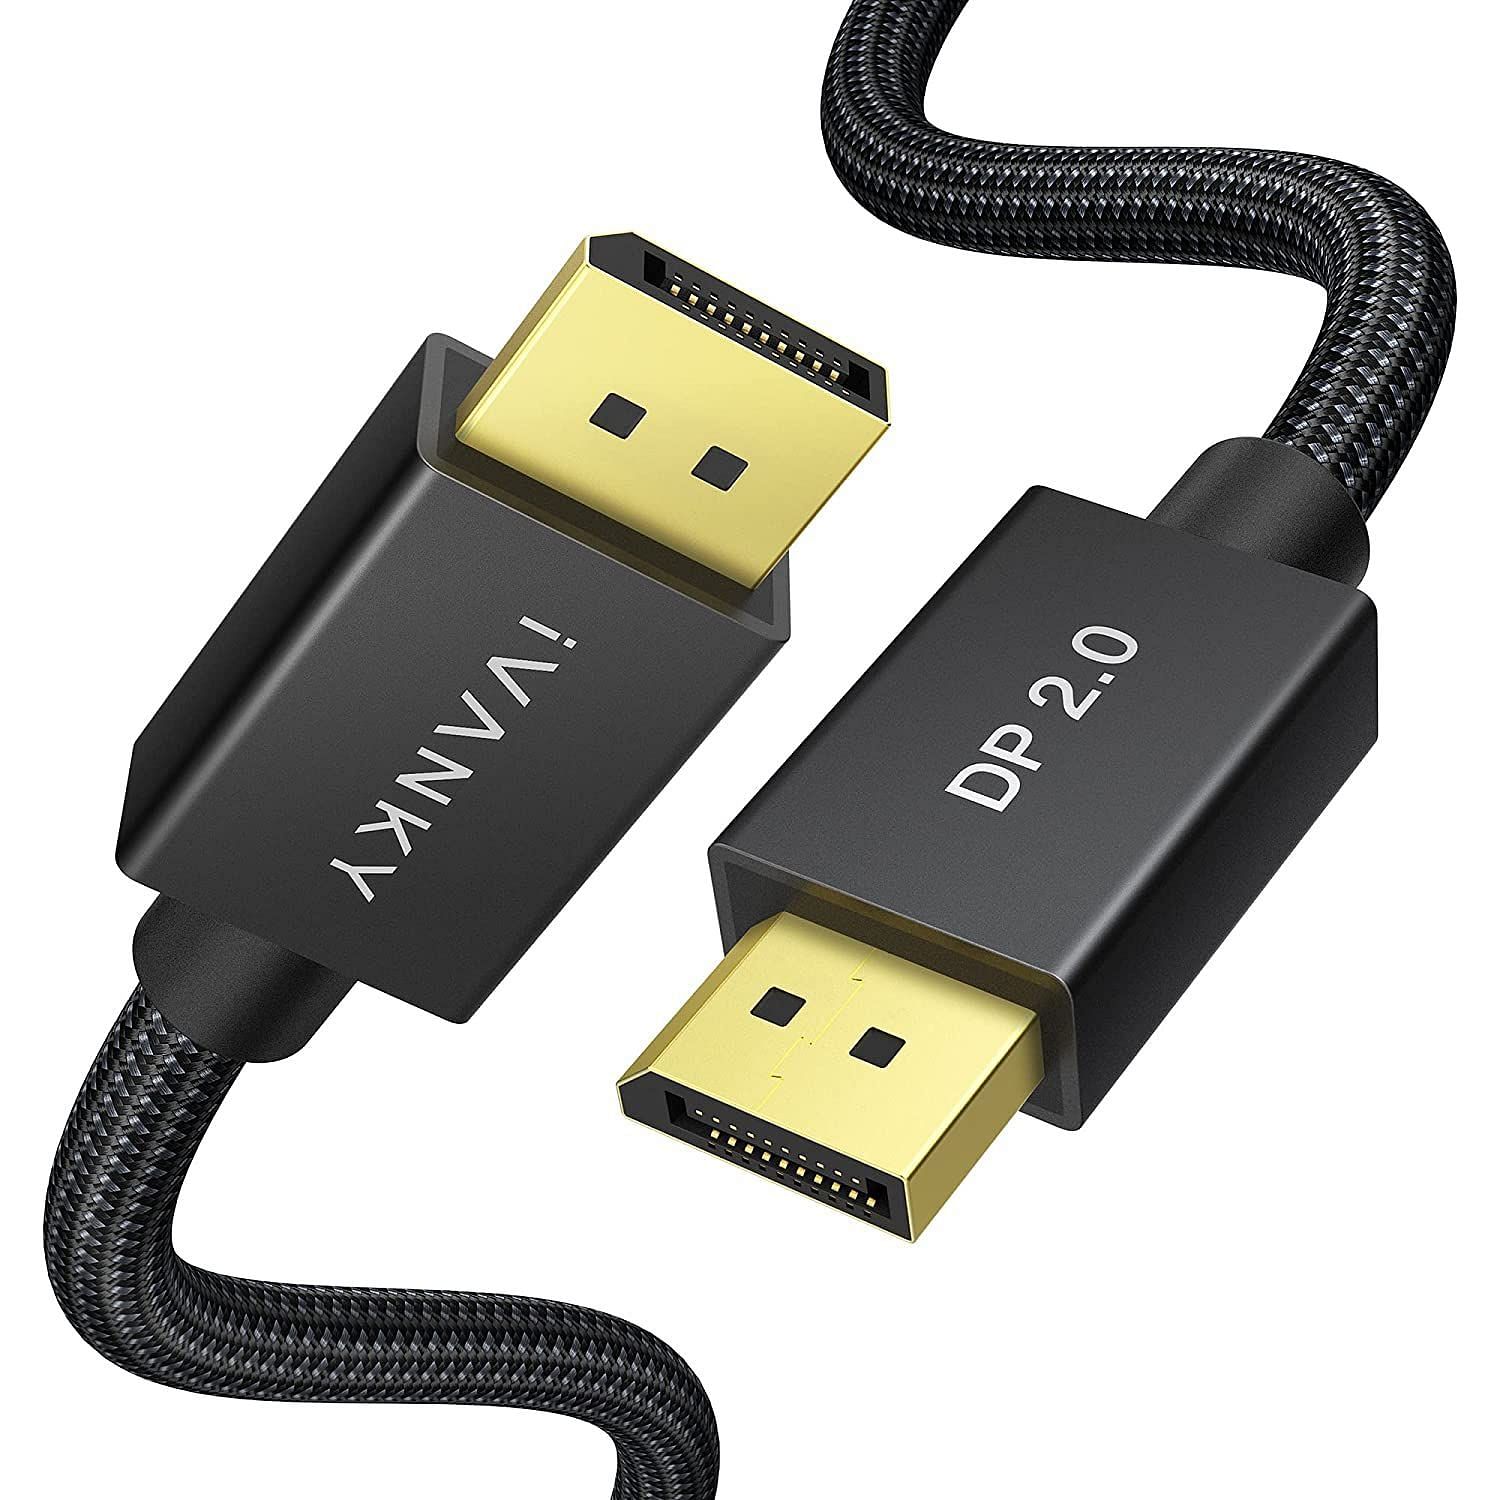 iVanky DP cable (Image via Amazon)